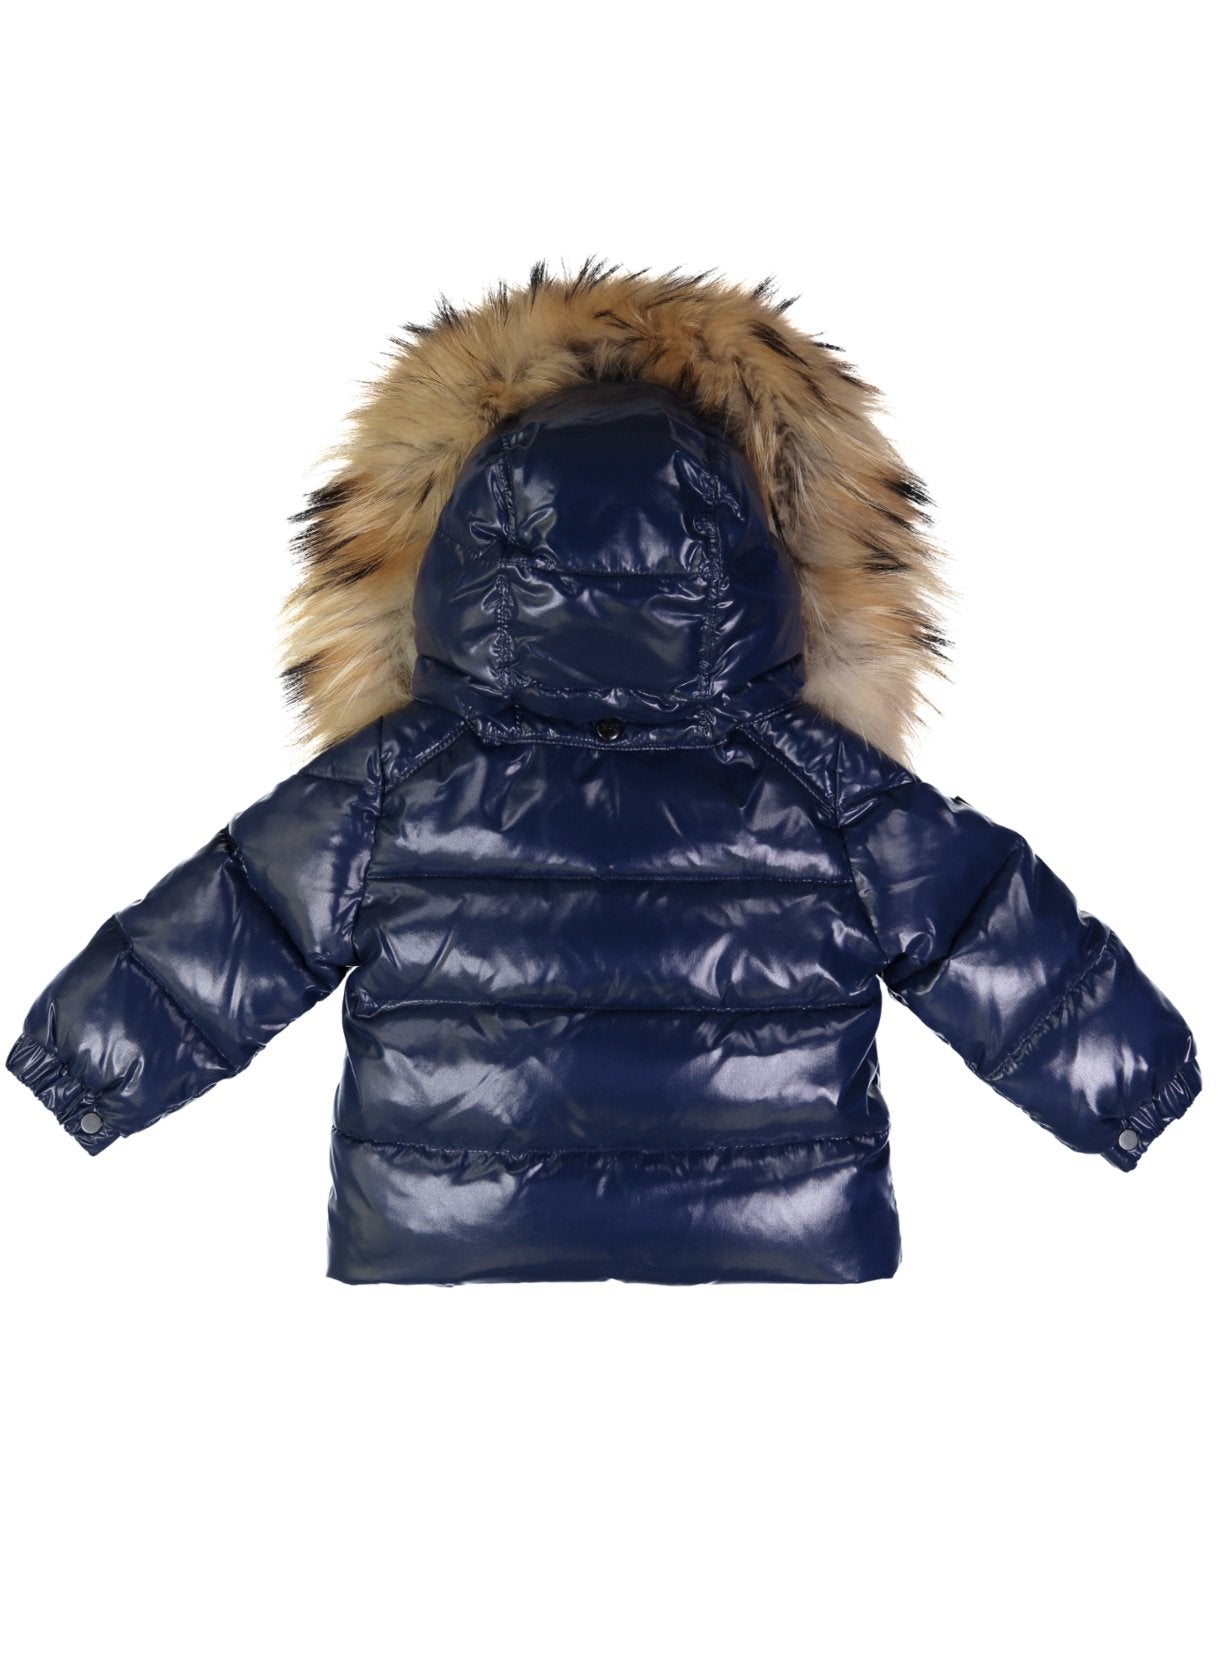 SAM. Outerwear Snowbunny Jacket